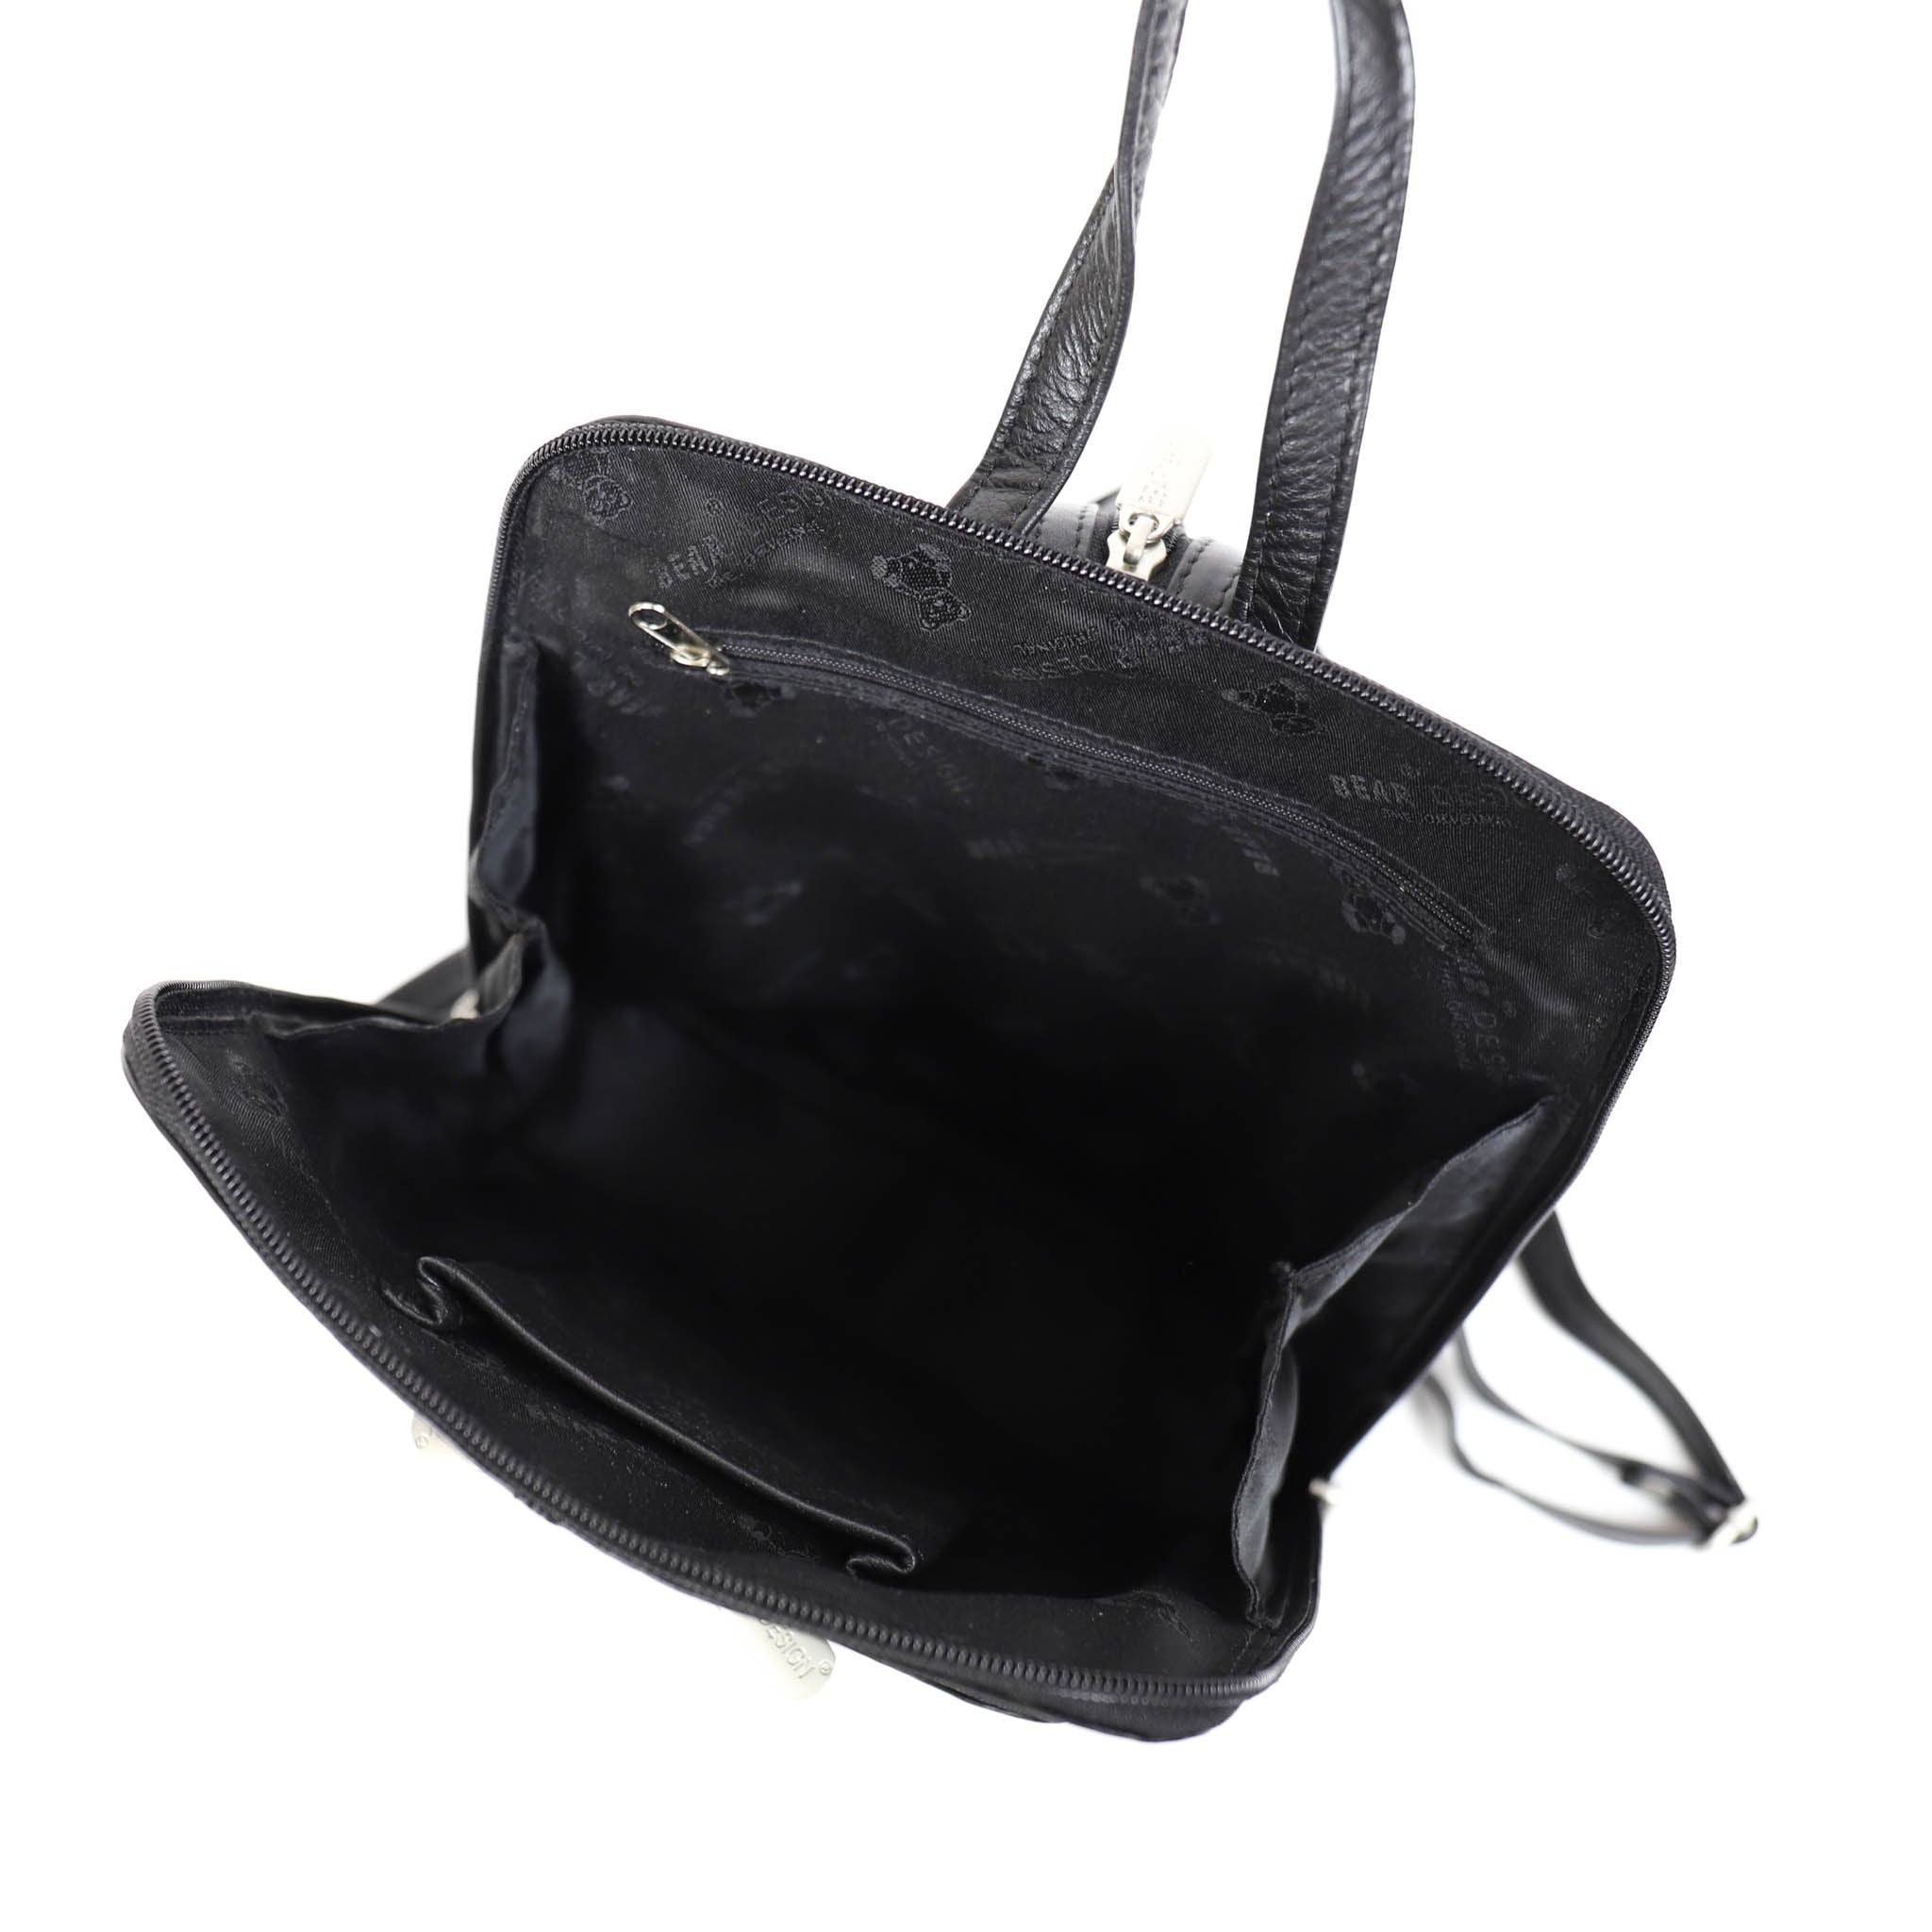 Backpack 'Barbel' black - B 6282